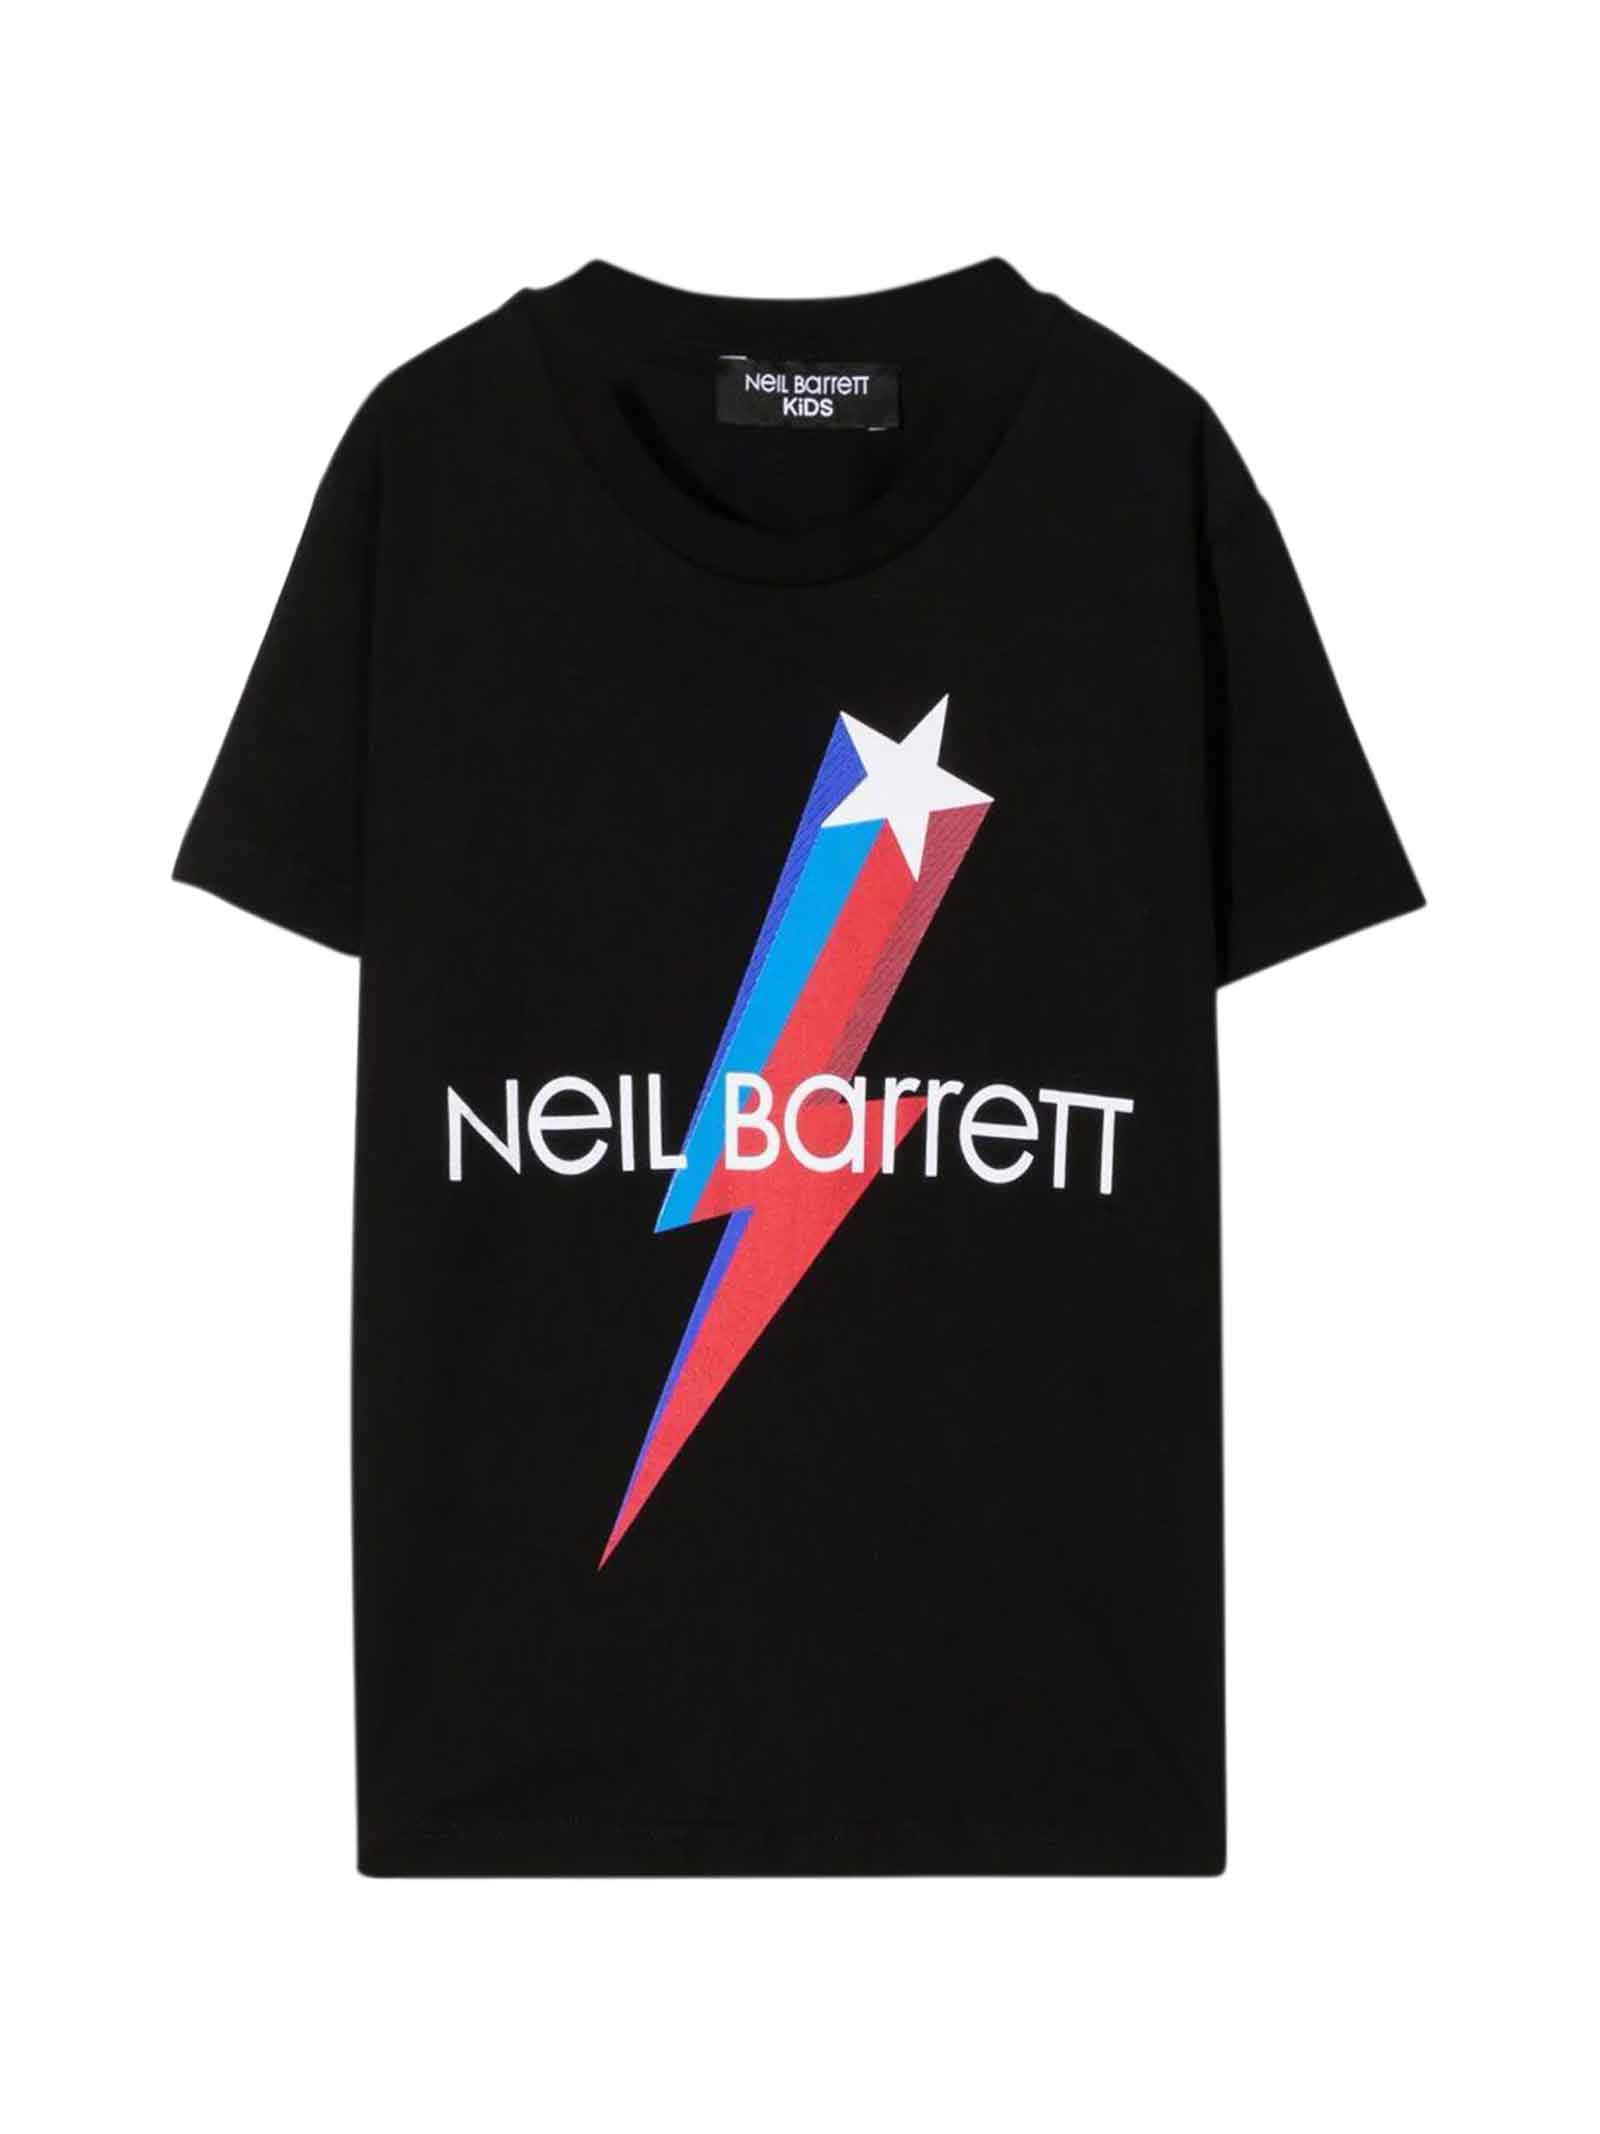 Neil Barrett Teen Black T-shirt